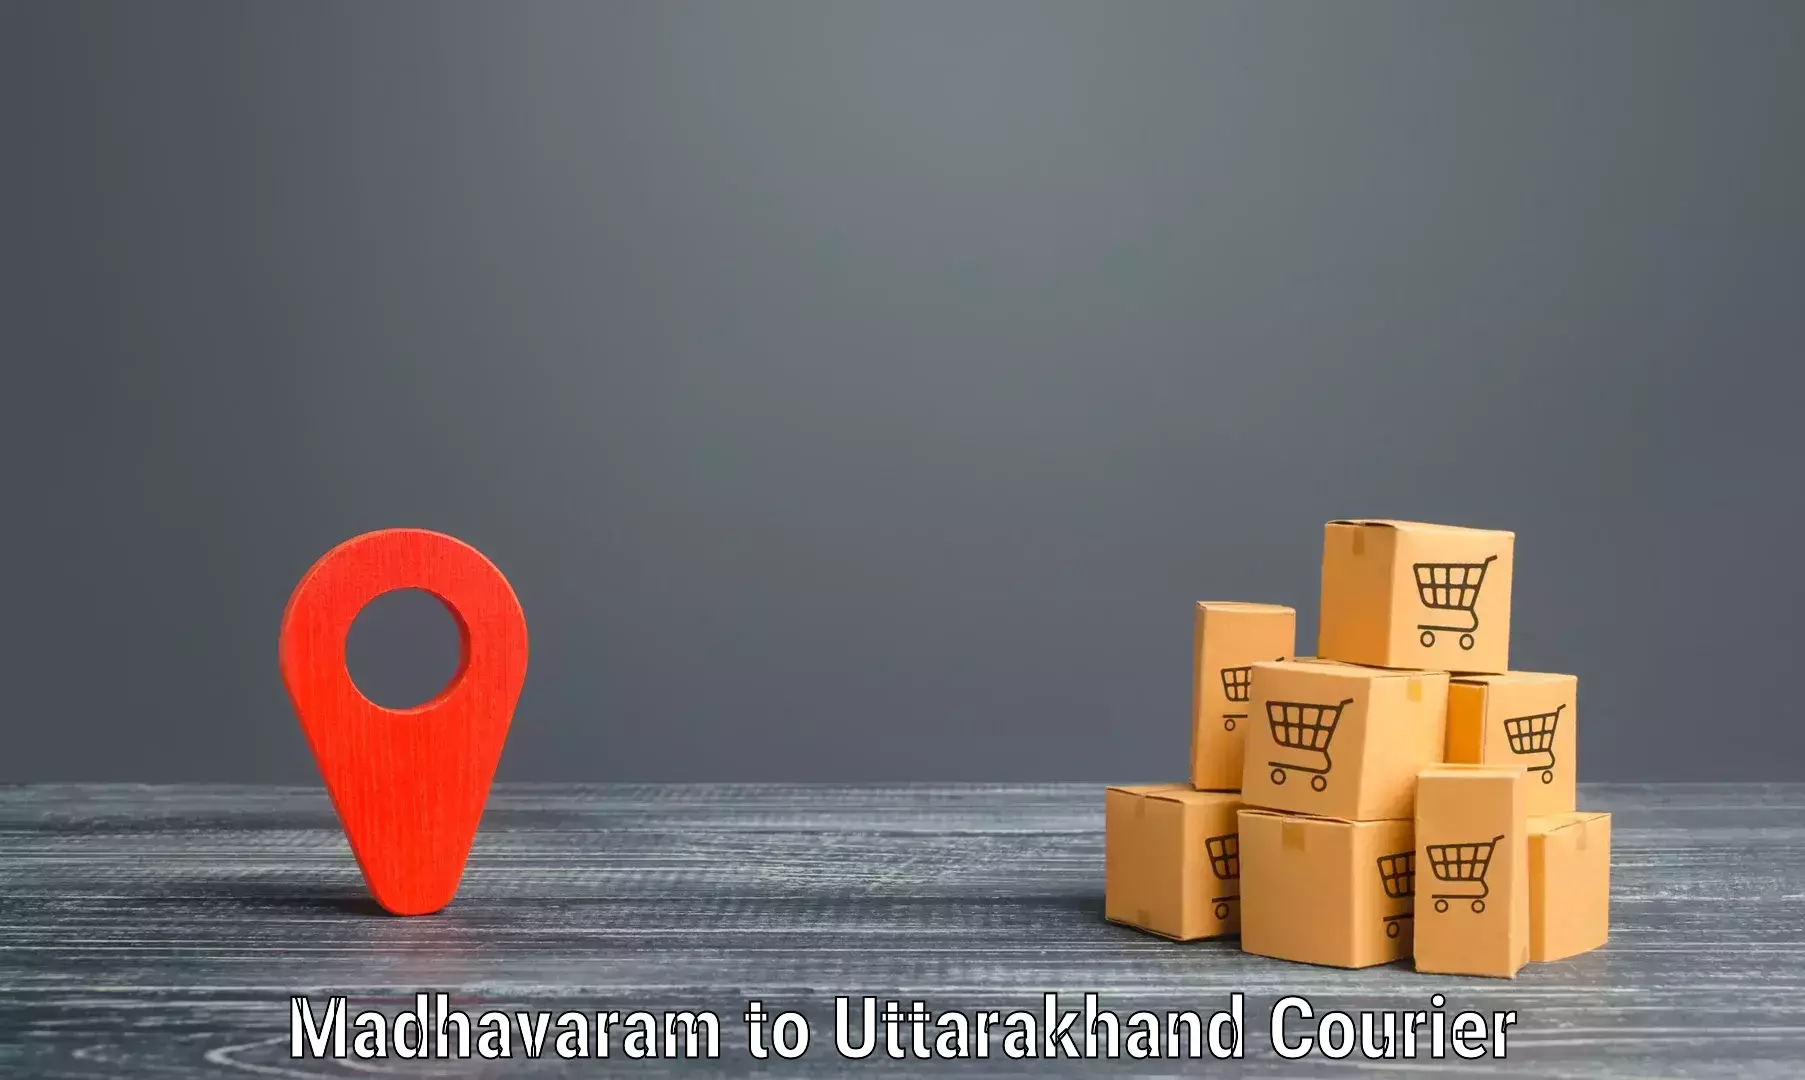 Reliable courier service in Madhavaram to Dehradun